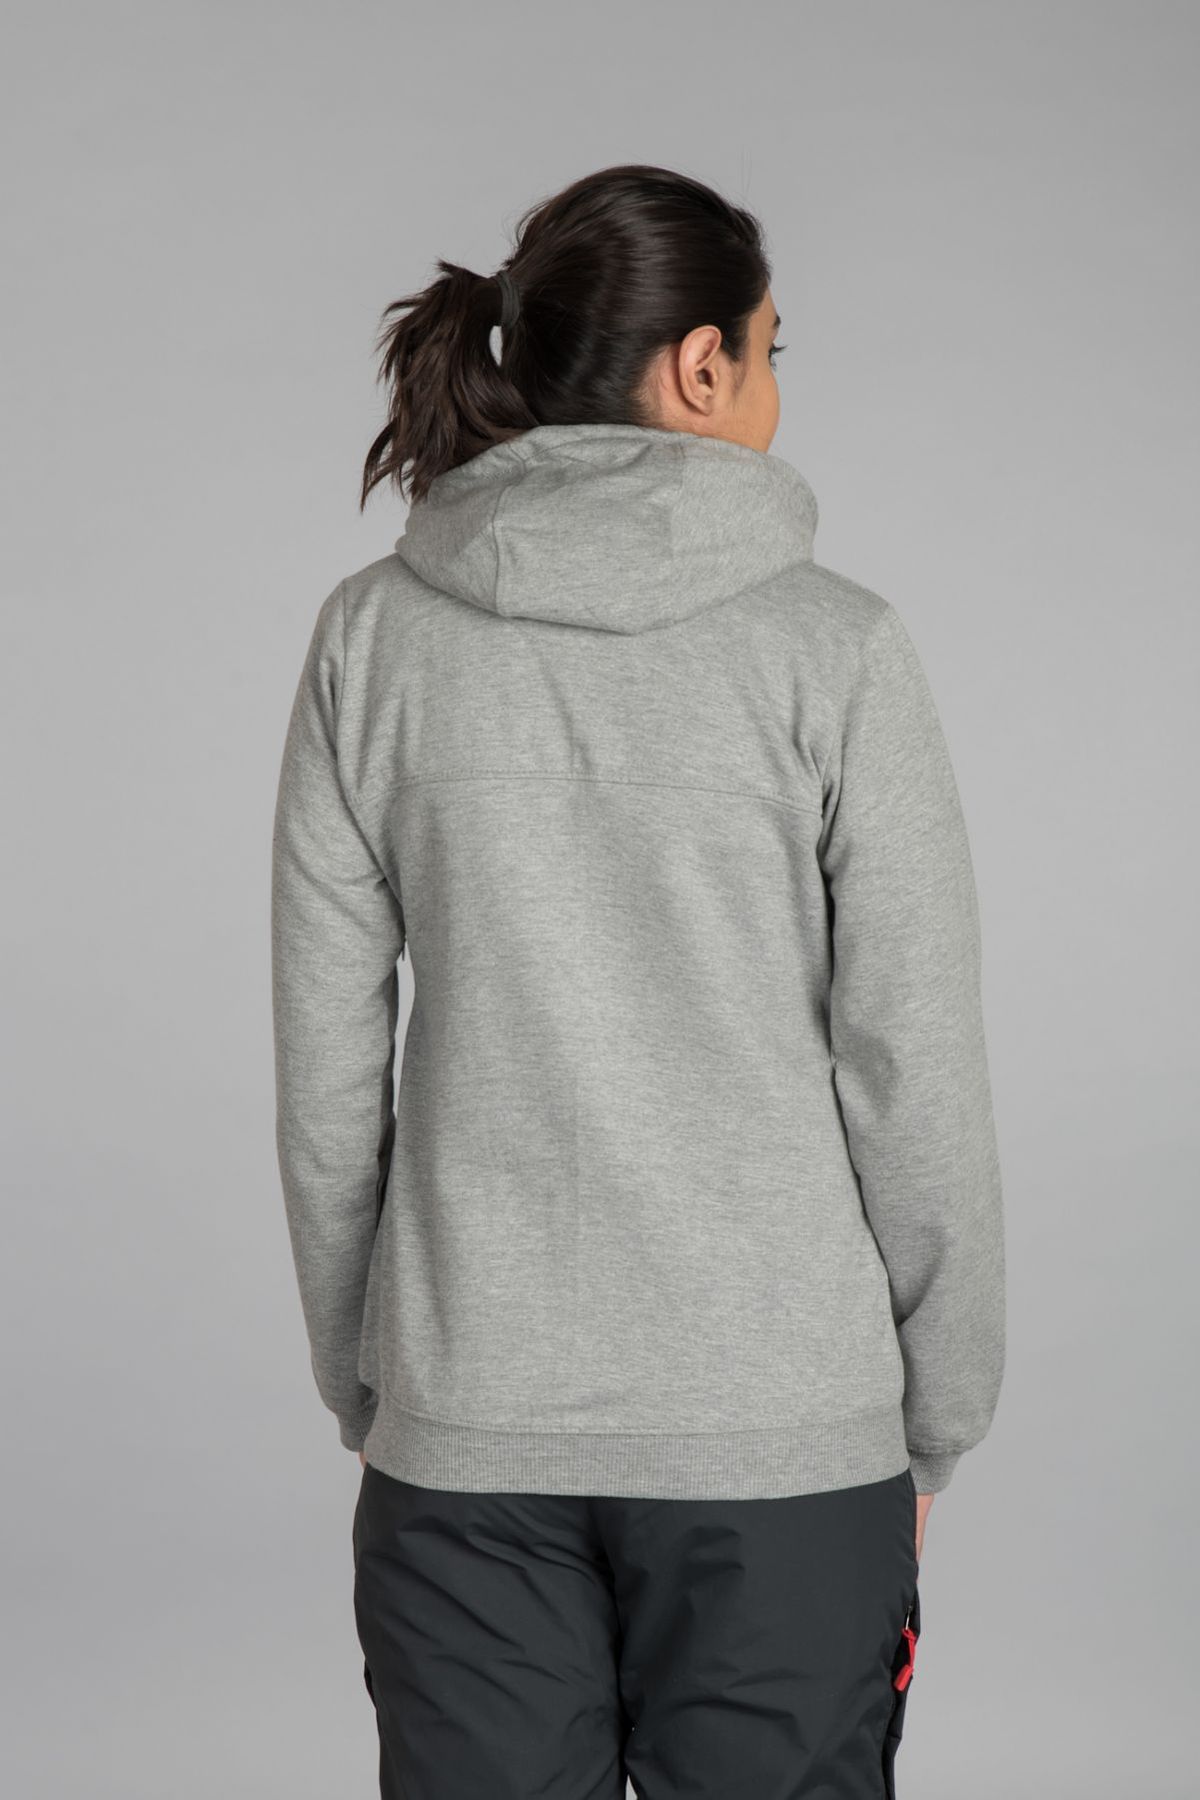 Grey Fleece Lined Sweatshirt | Women